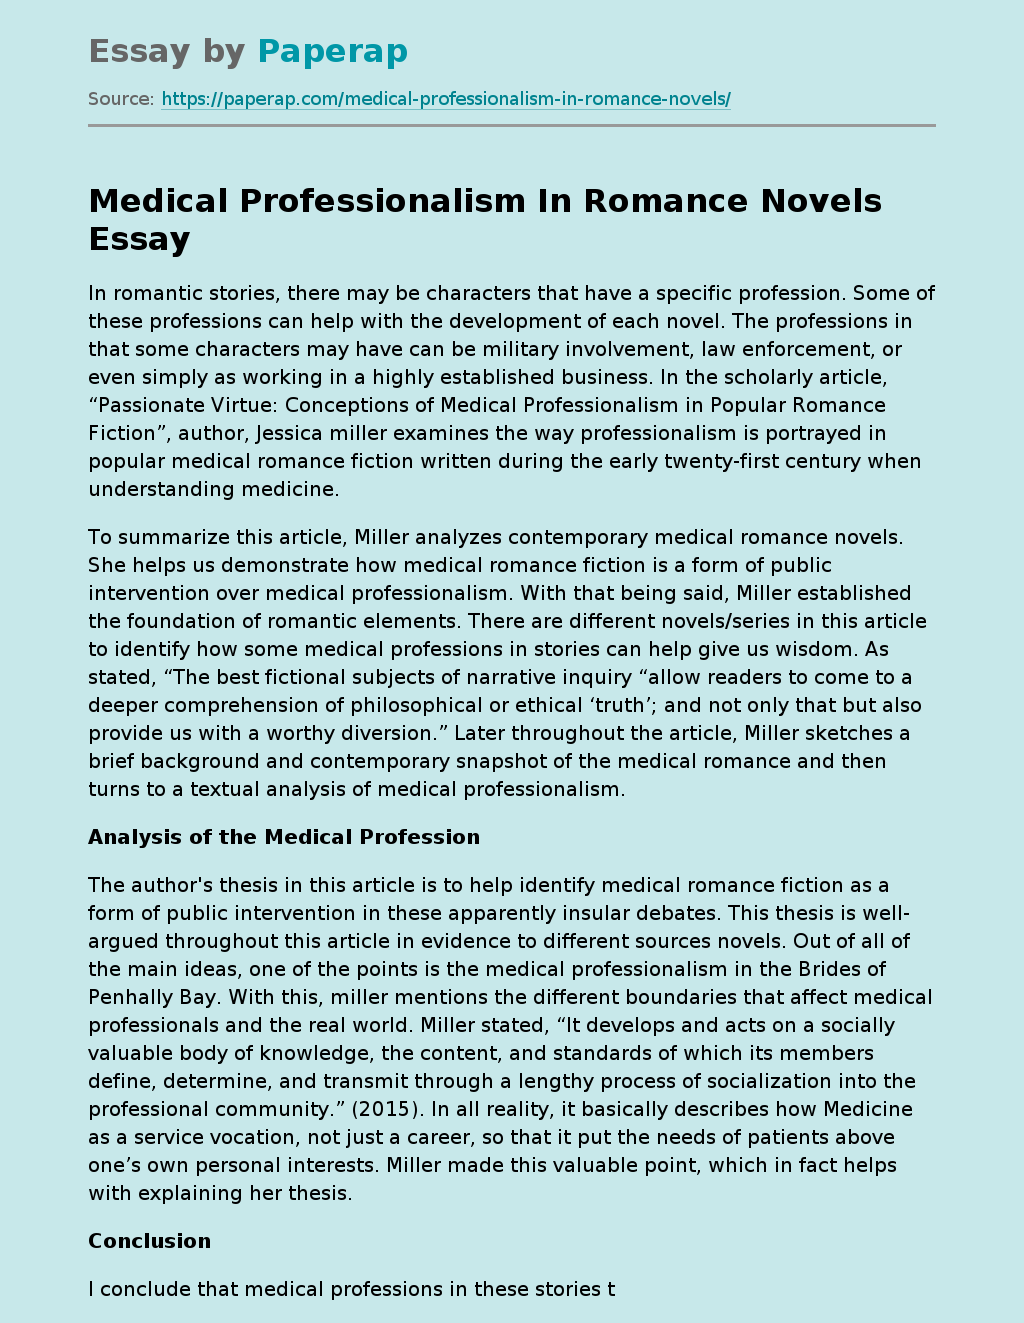 Medical Professionalism In Romance Novels